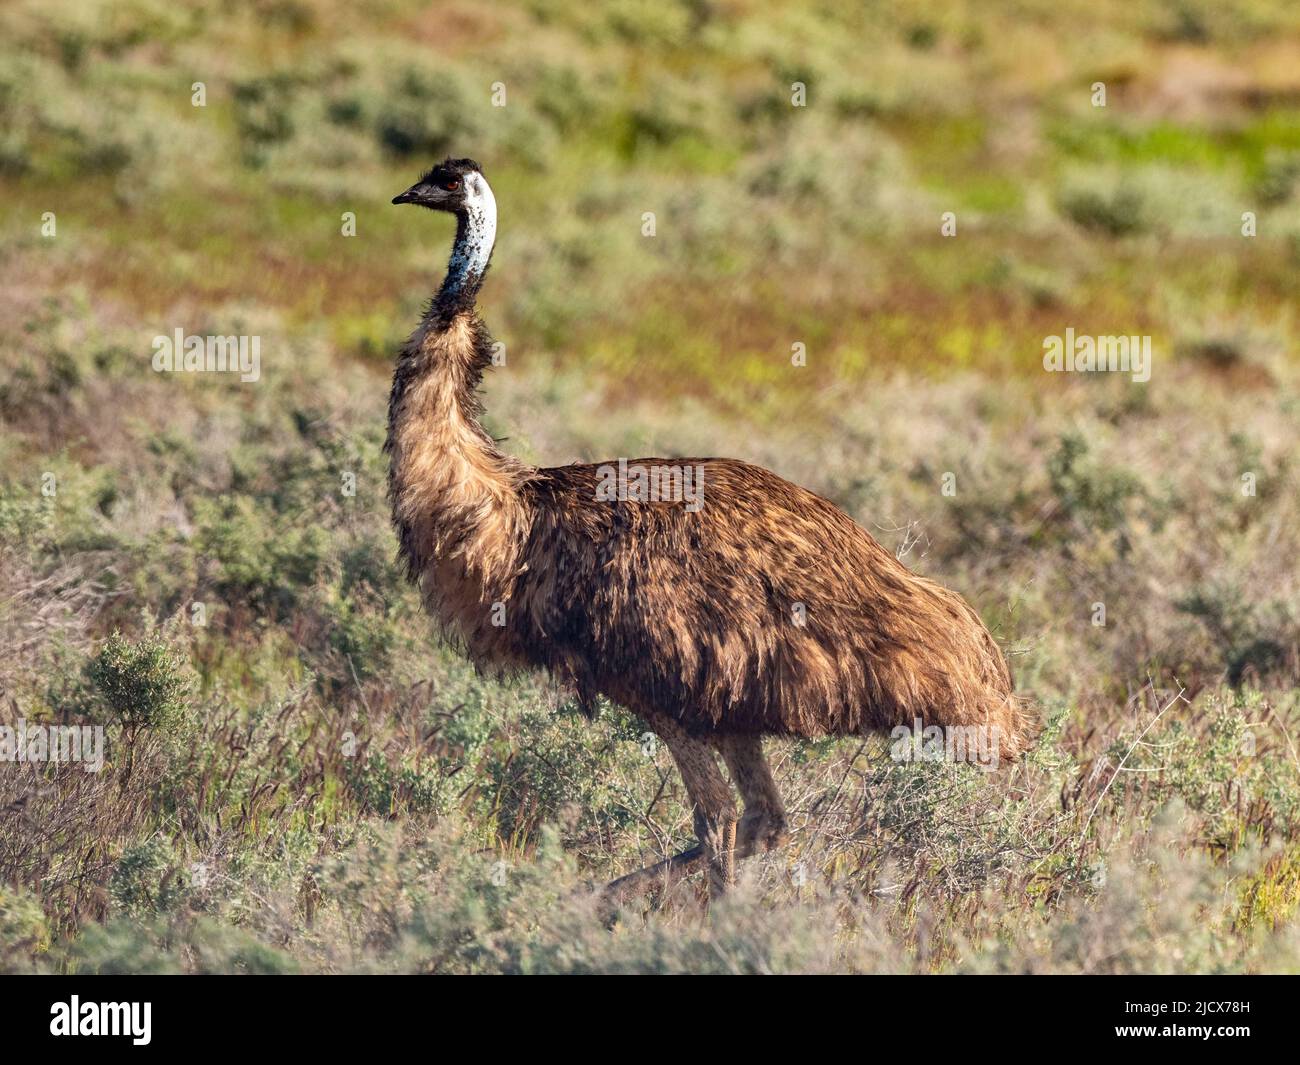 emu adulto (Dramaius novaehollandiae), en el monte del Parque Nacional de Cape Range, Australia Occidental, Australia, Pacífico Foto de stock